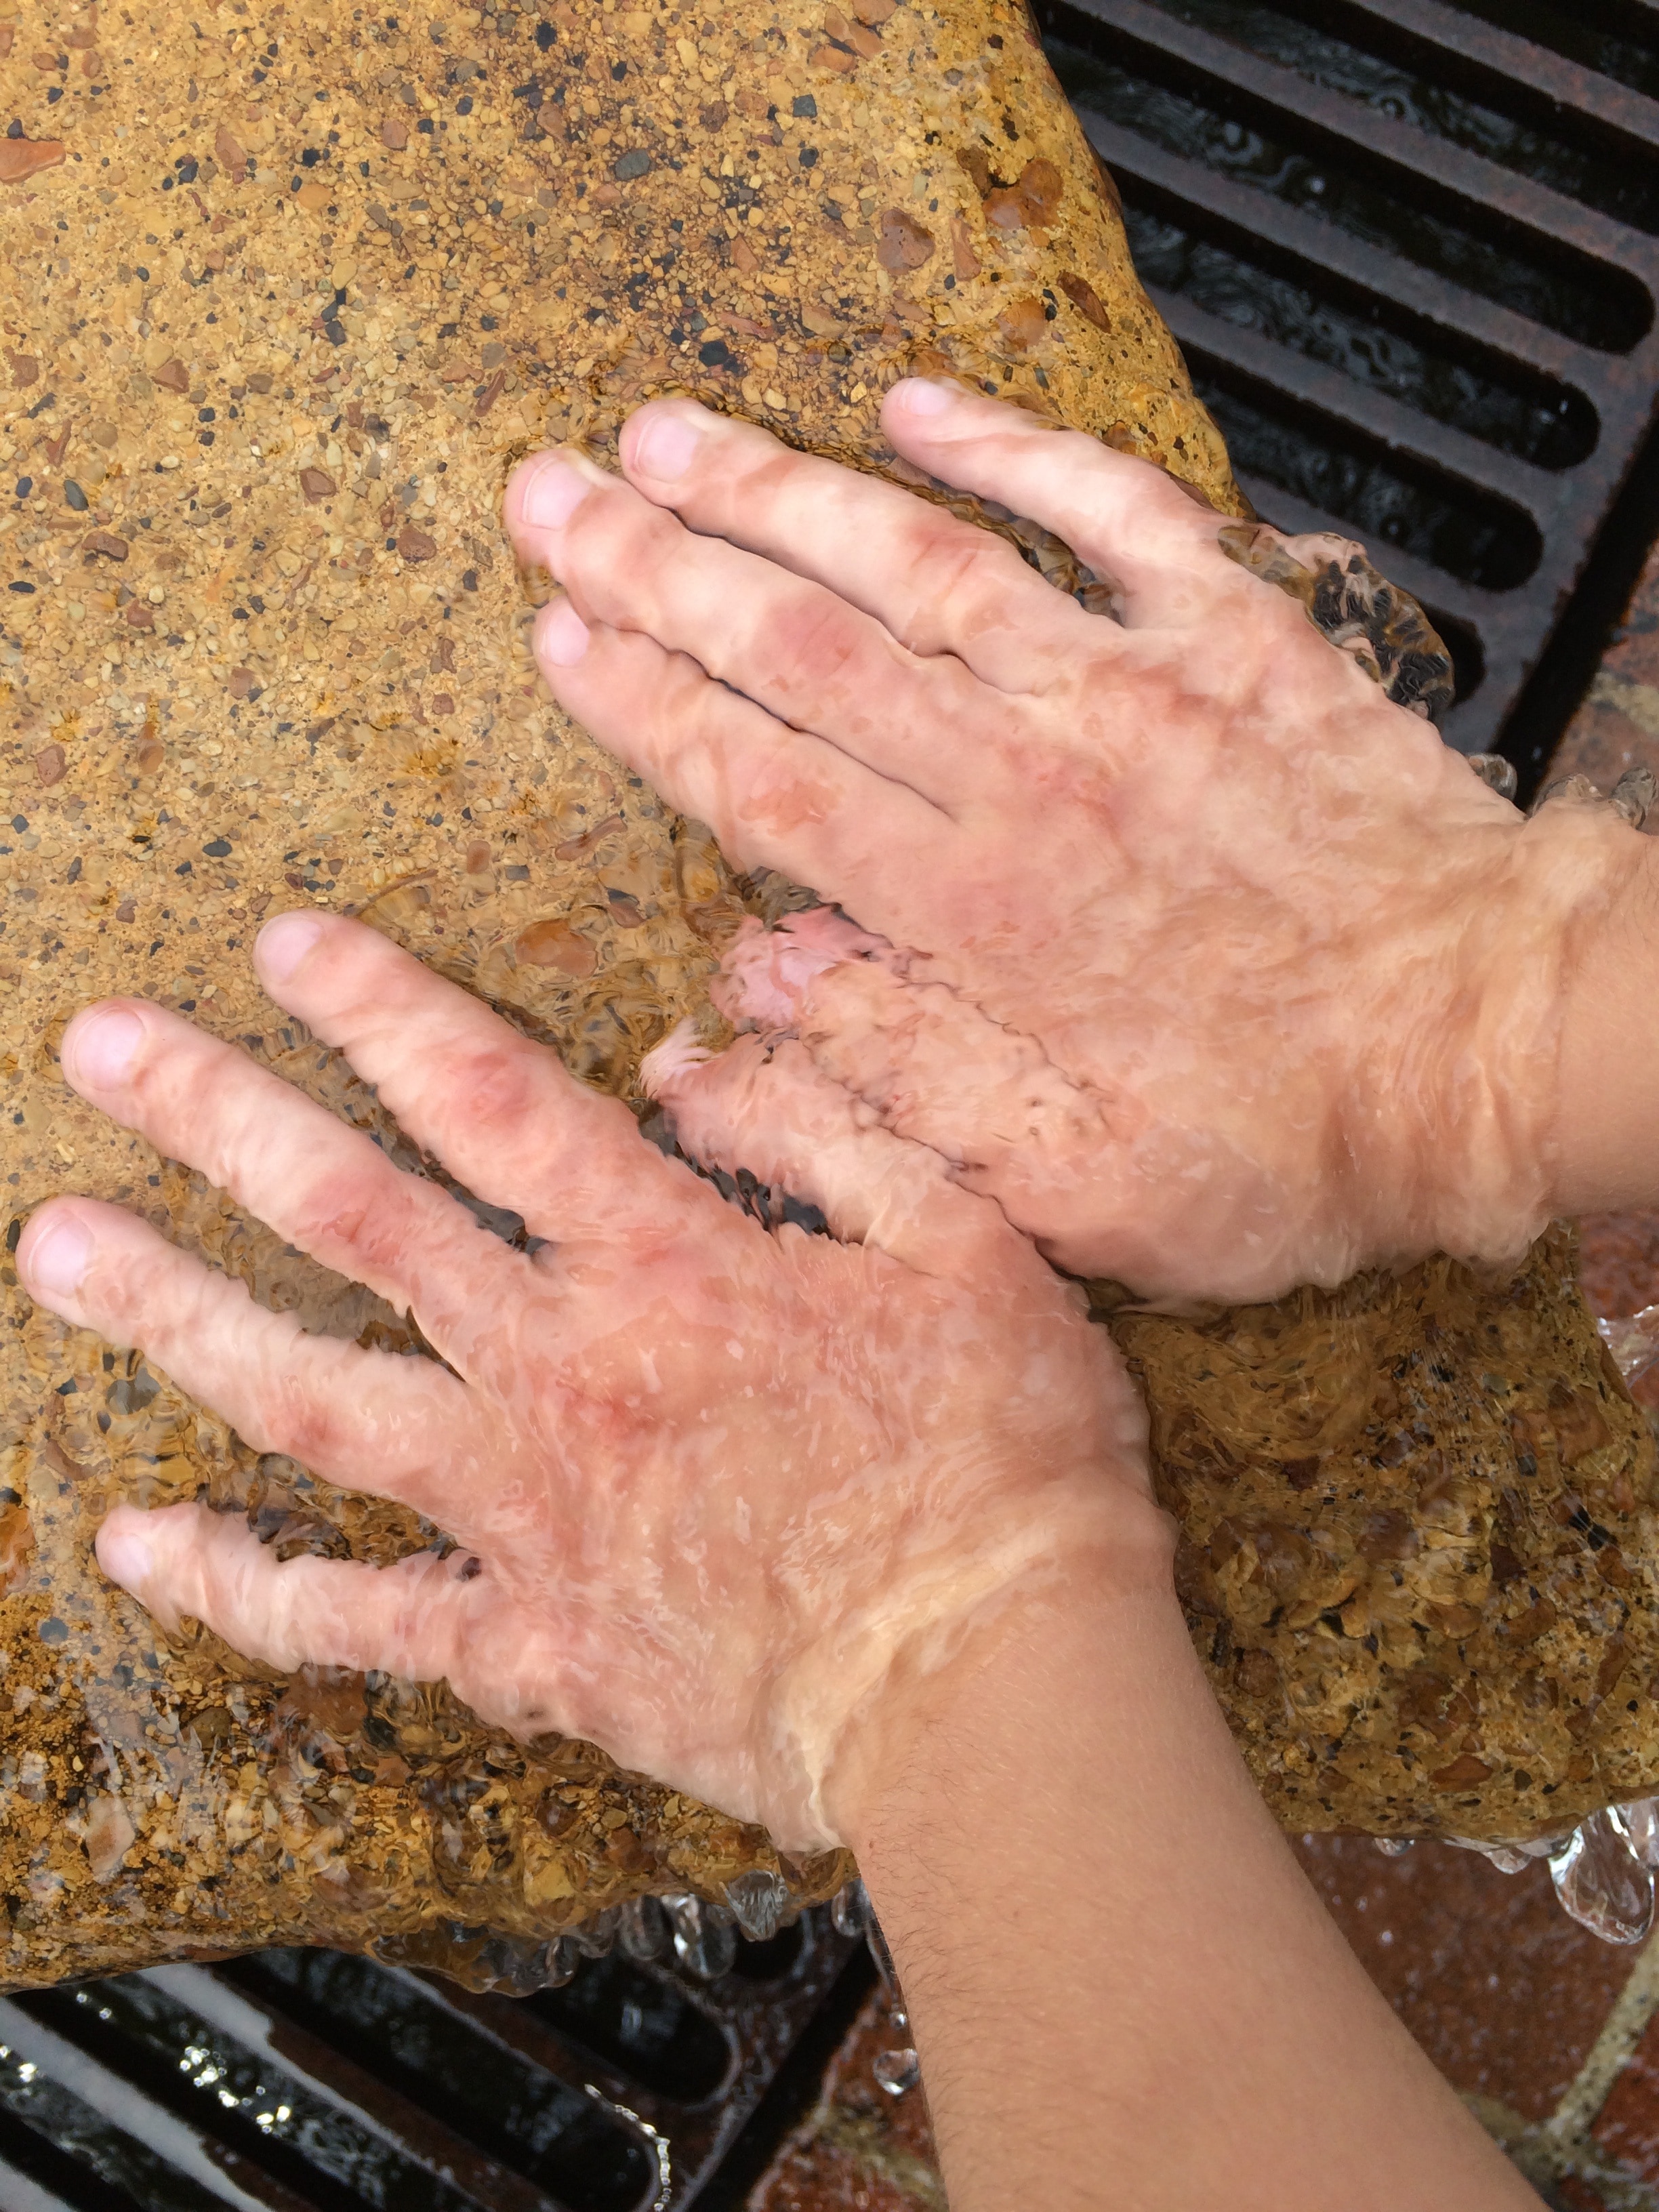 human hand skin condition